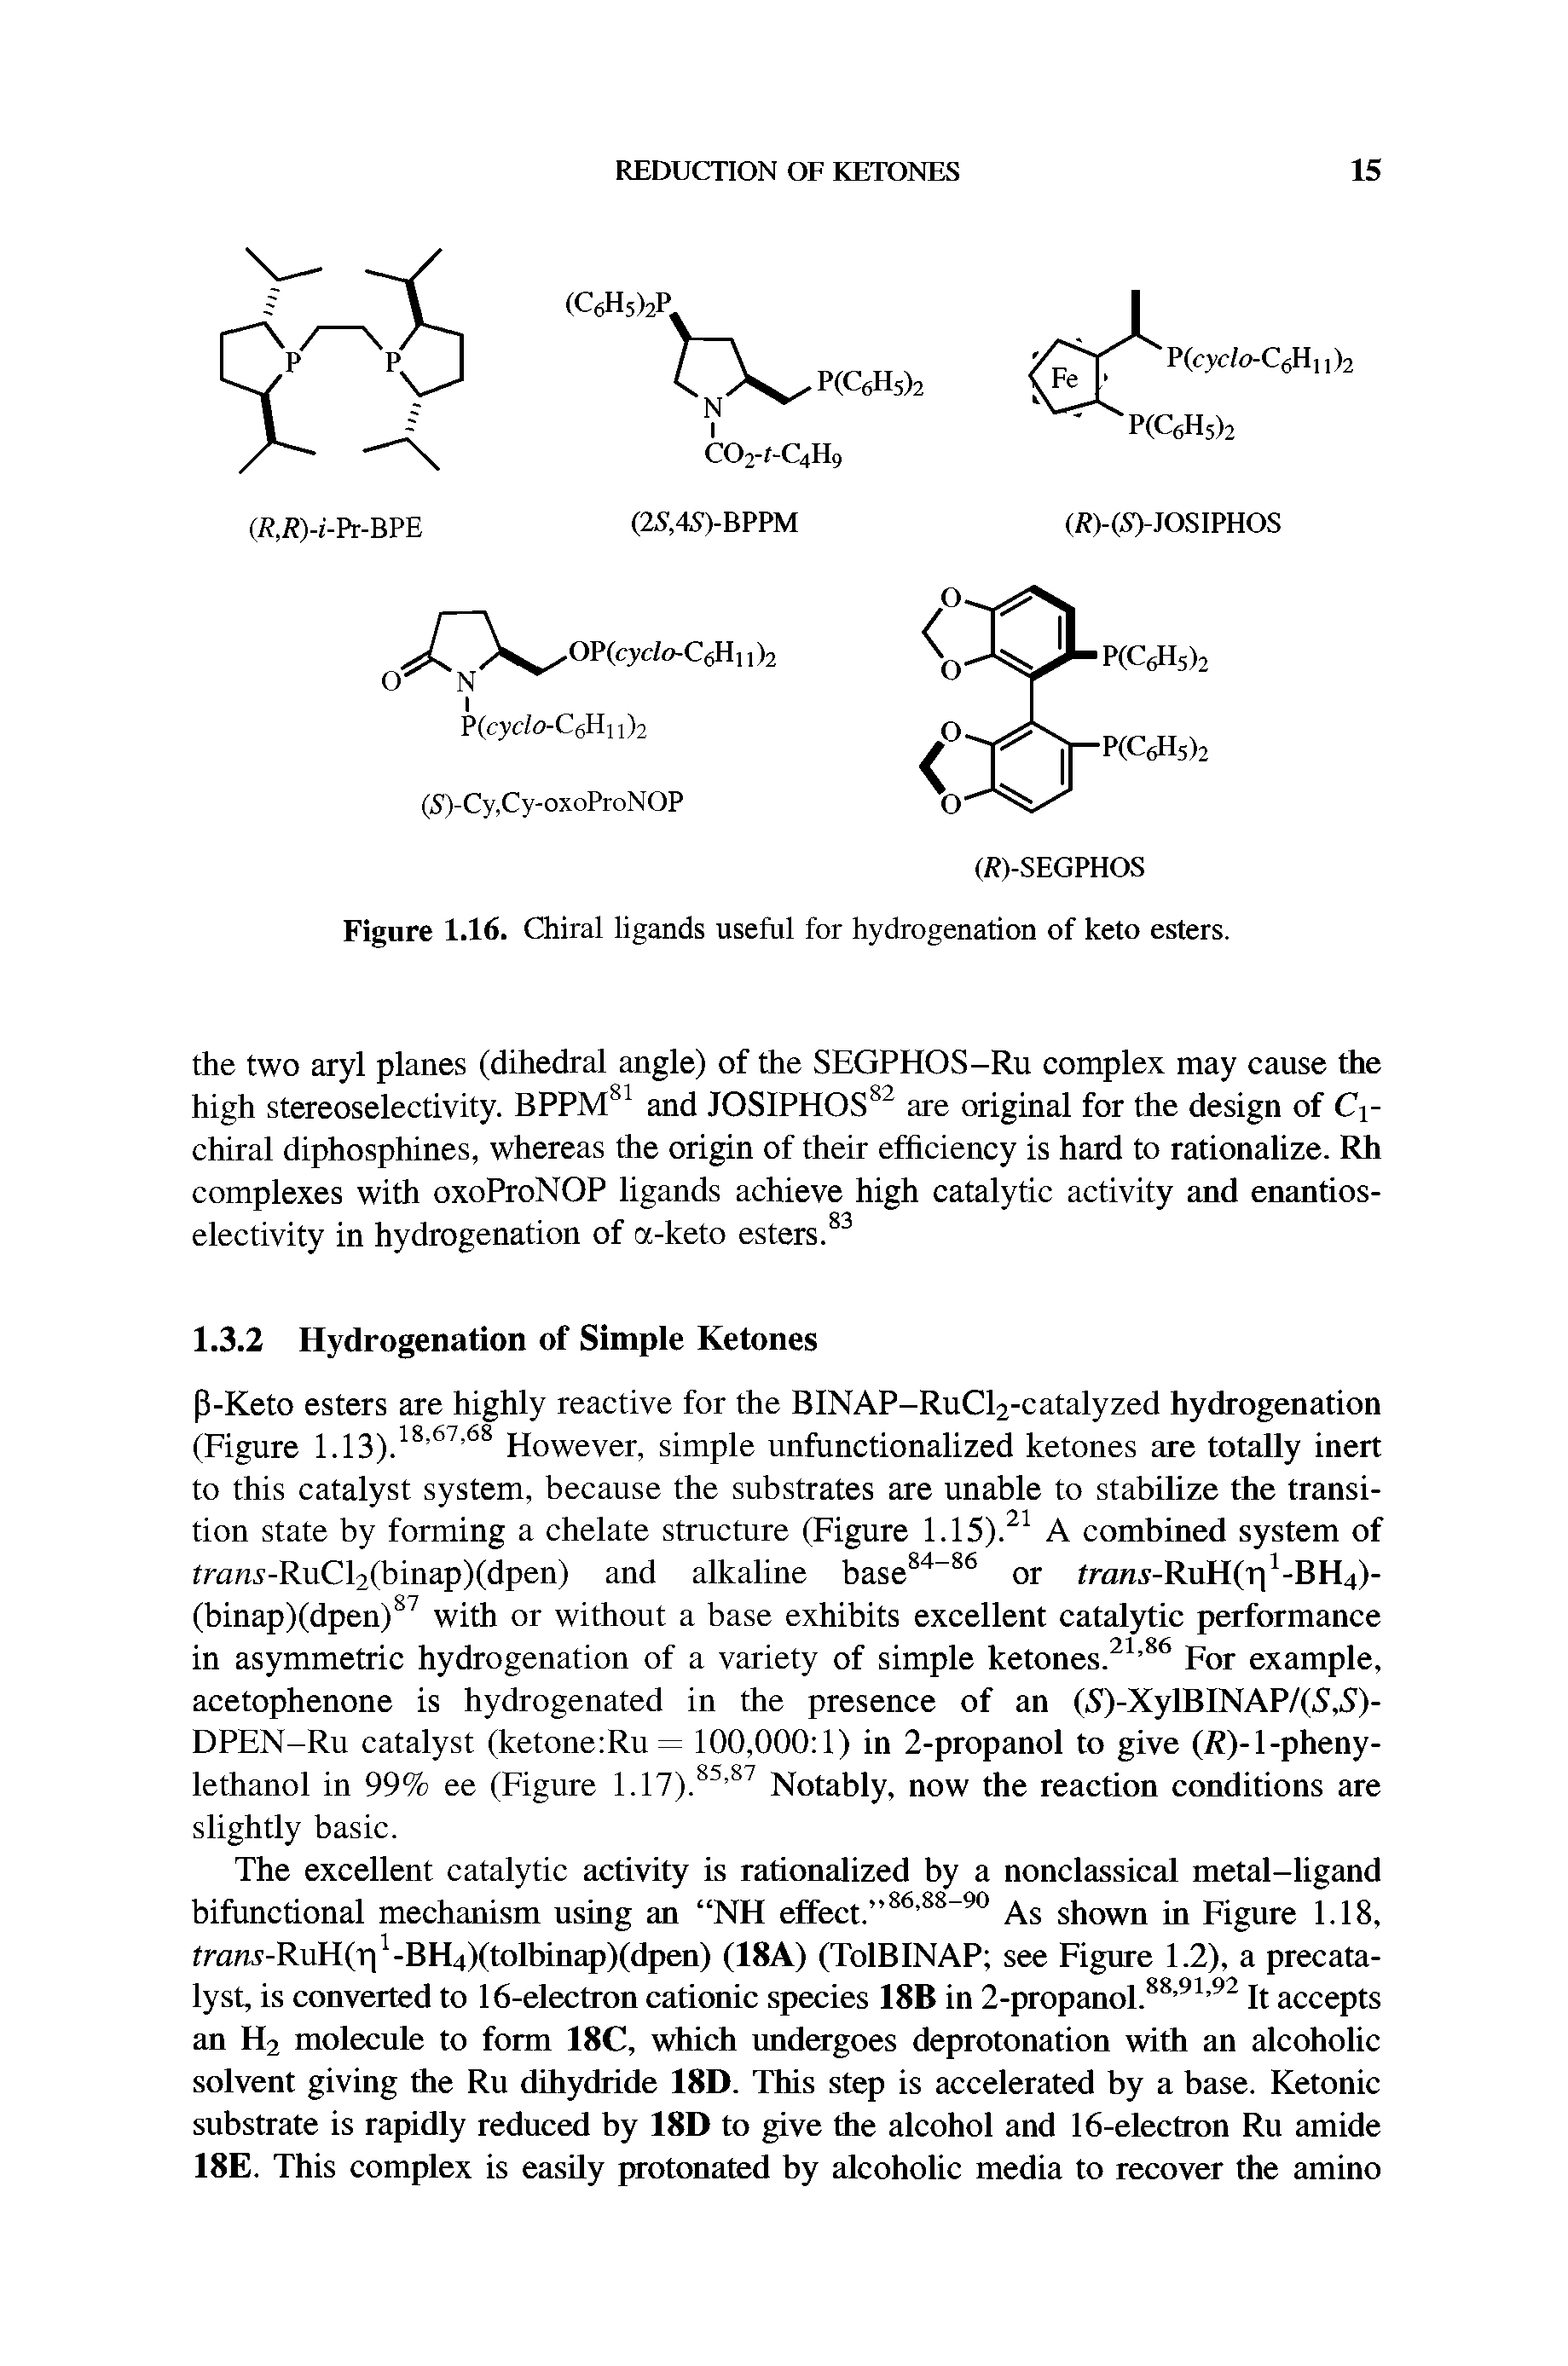 Figure 1.16. Chiral ligands useful for hydrogenation of keto esters.